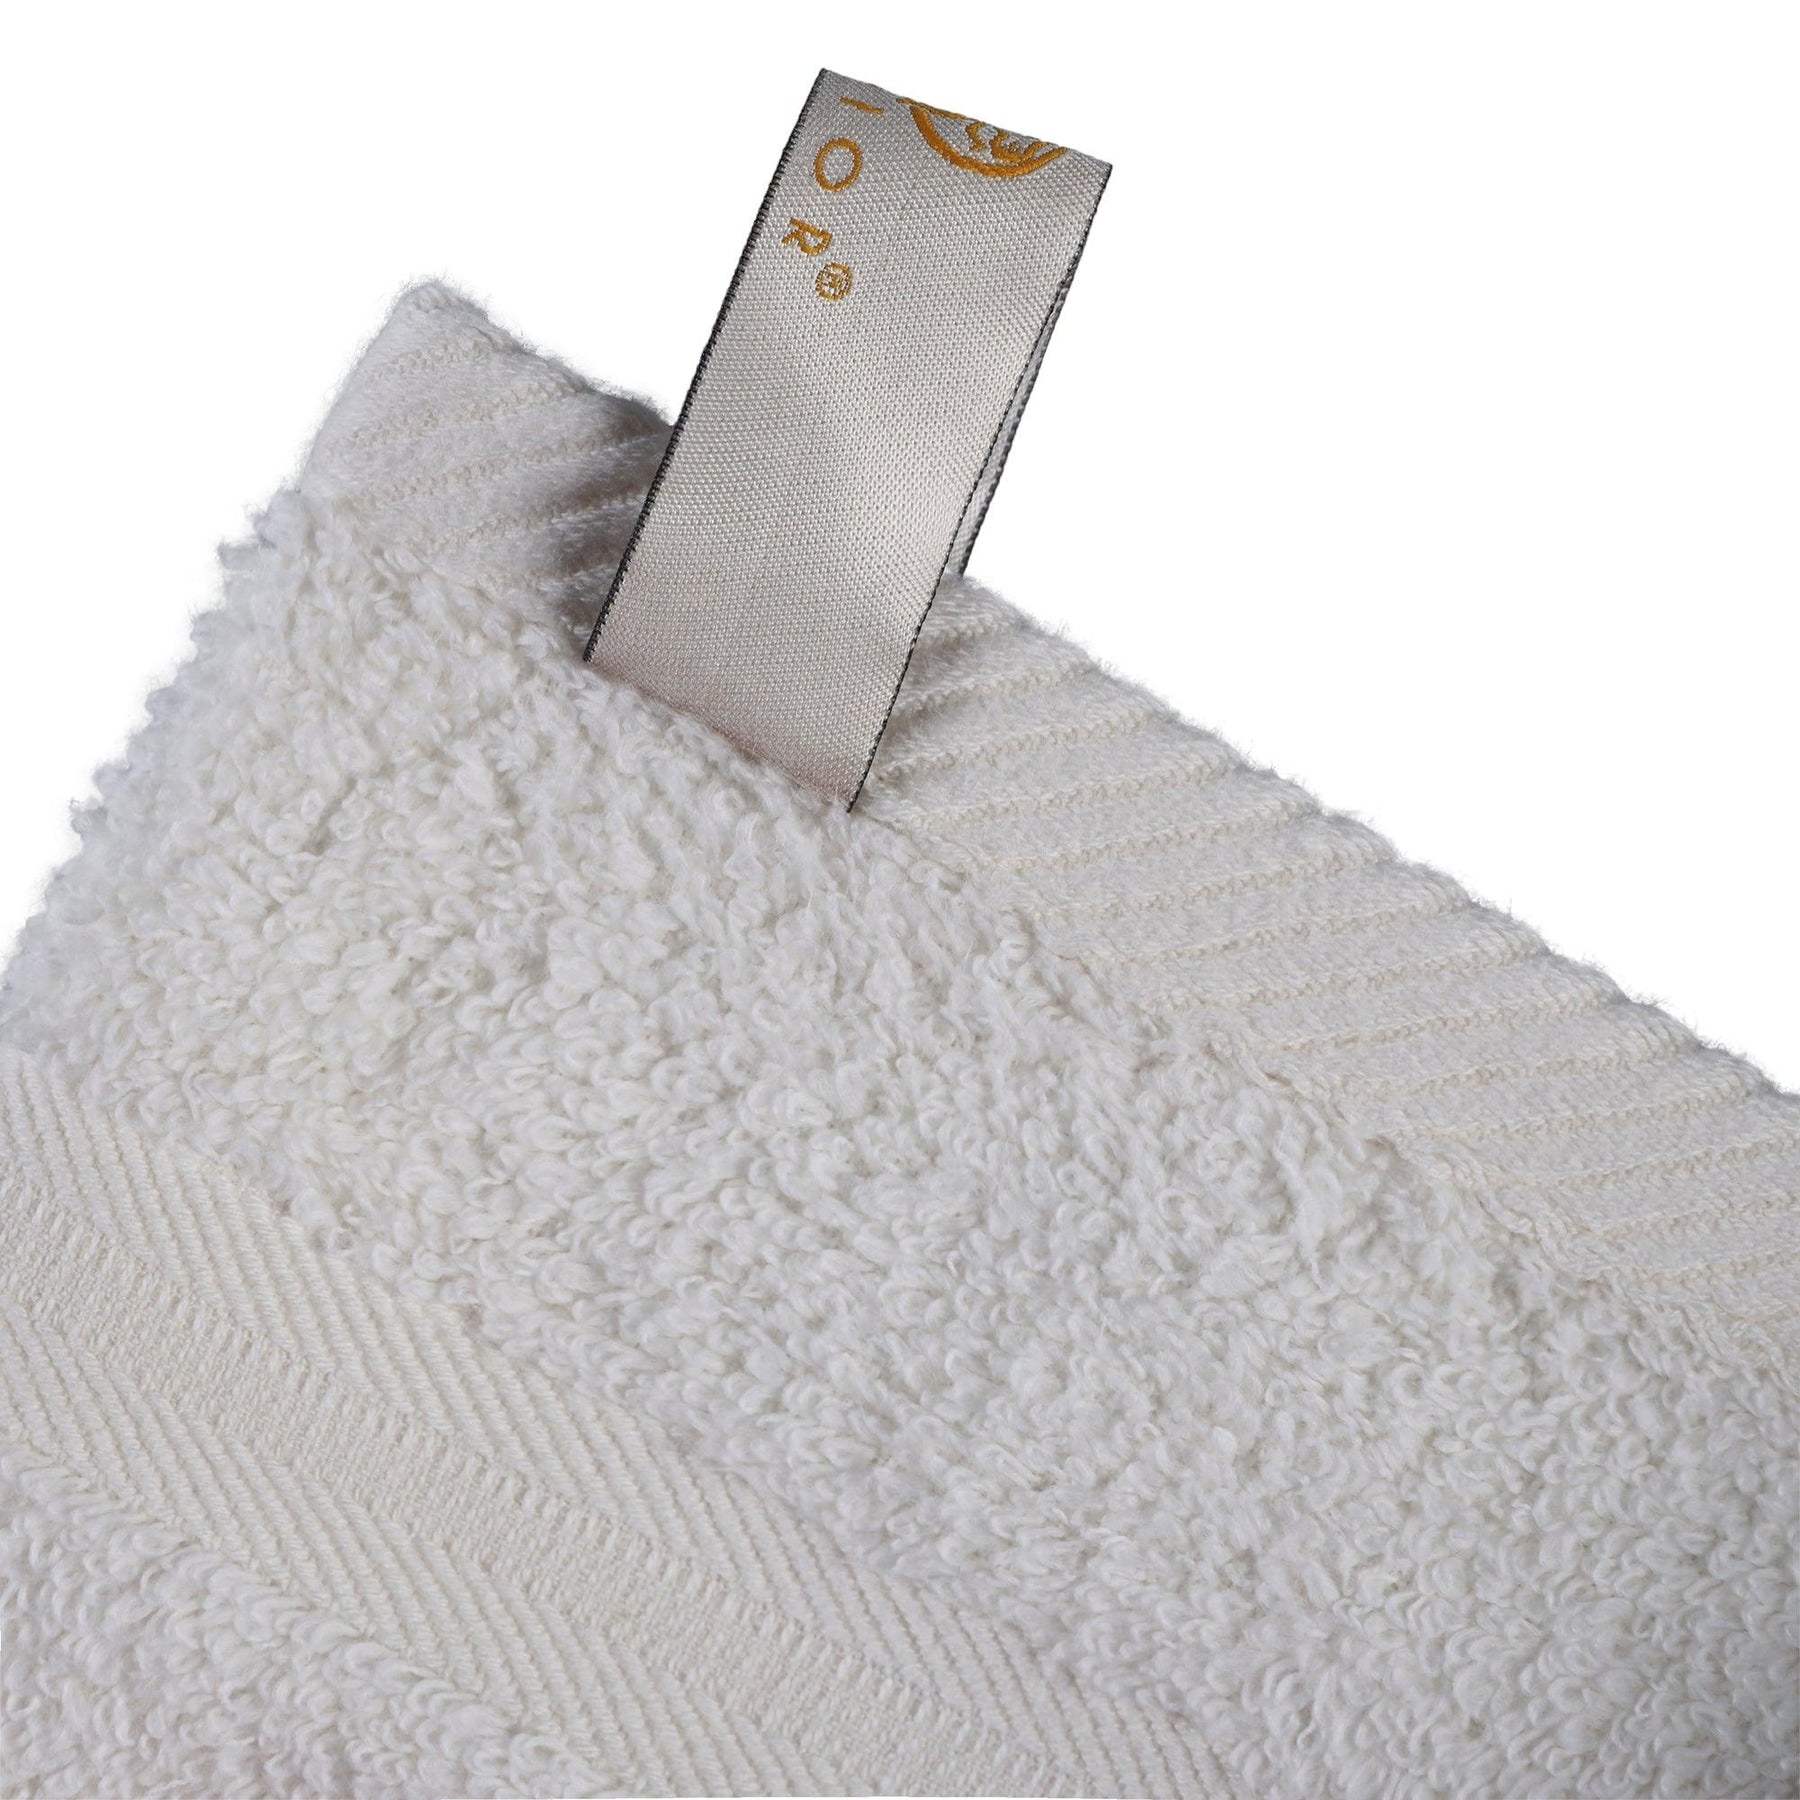 Superior 6pc Zero Twist Cotton Dobby Border Soft Towel Set ,Cranberry